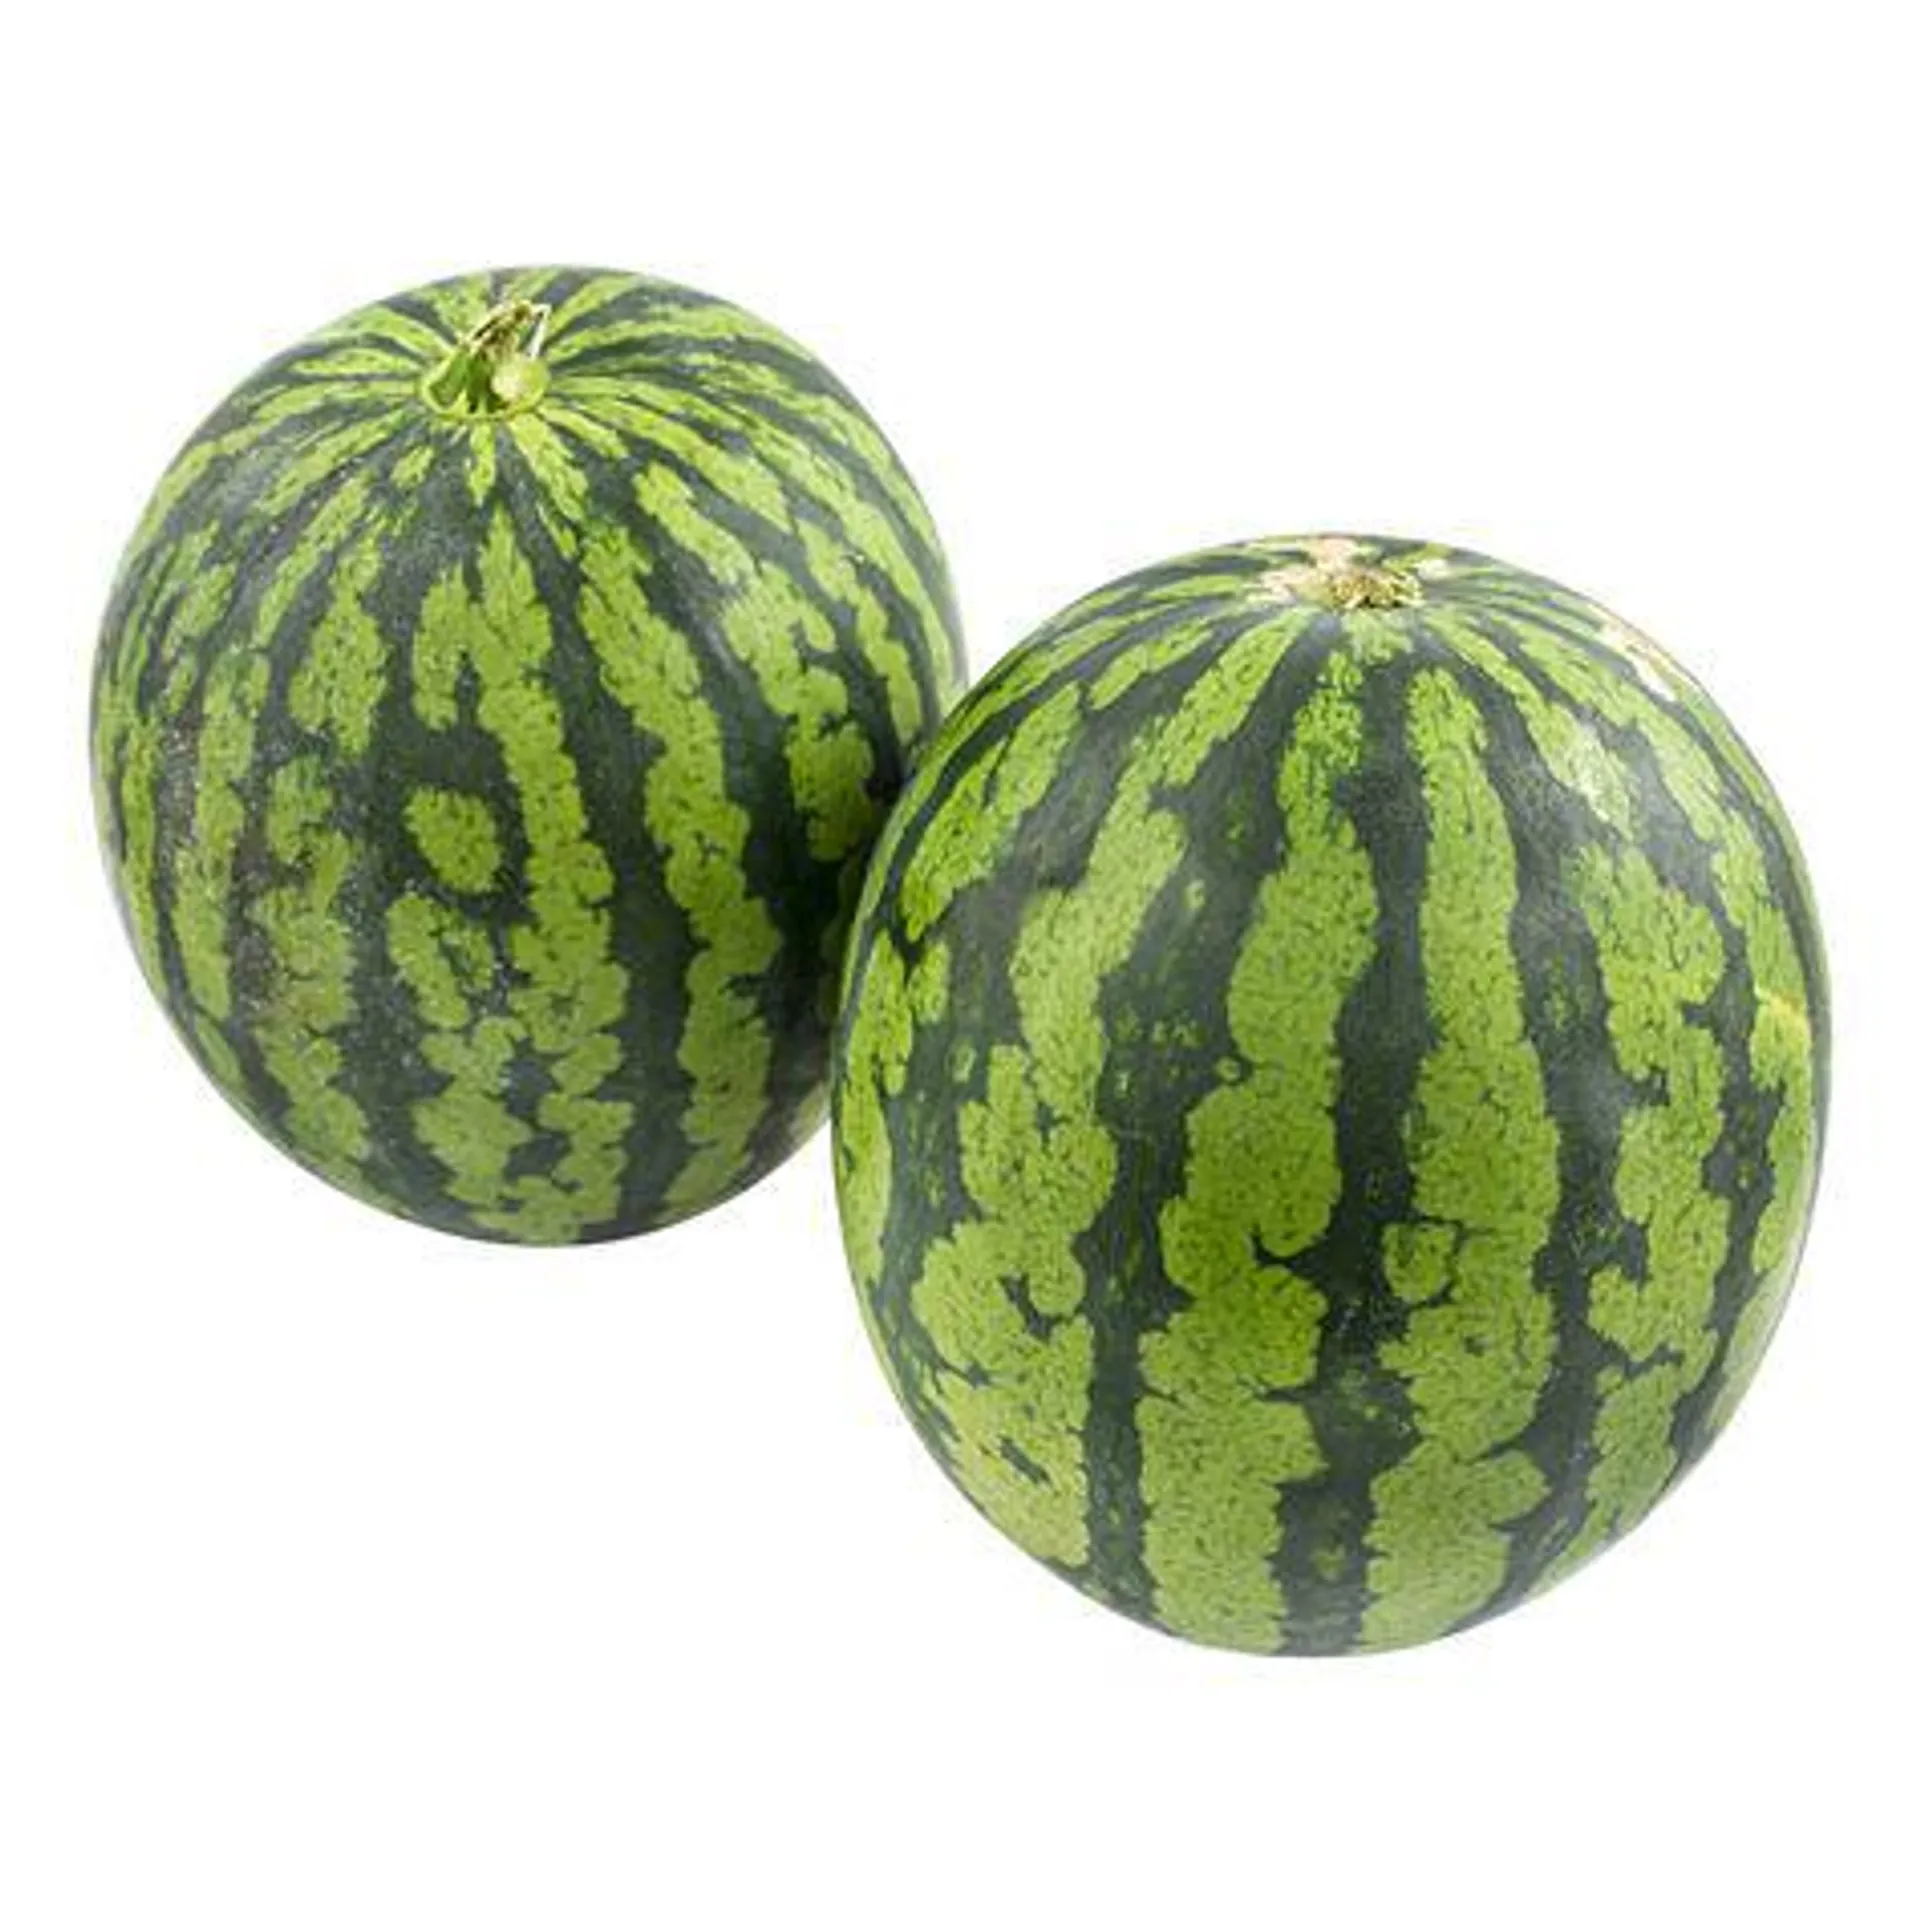 Melon Mini Vatten Eko Klass 1